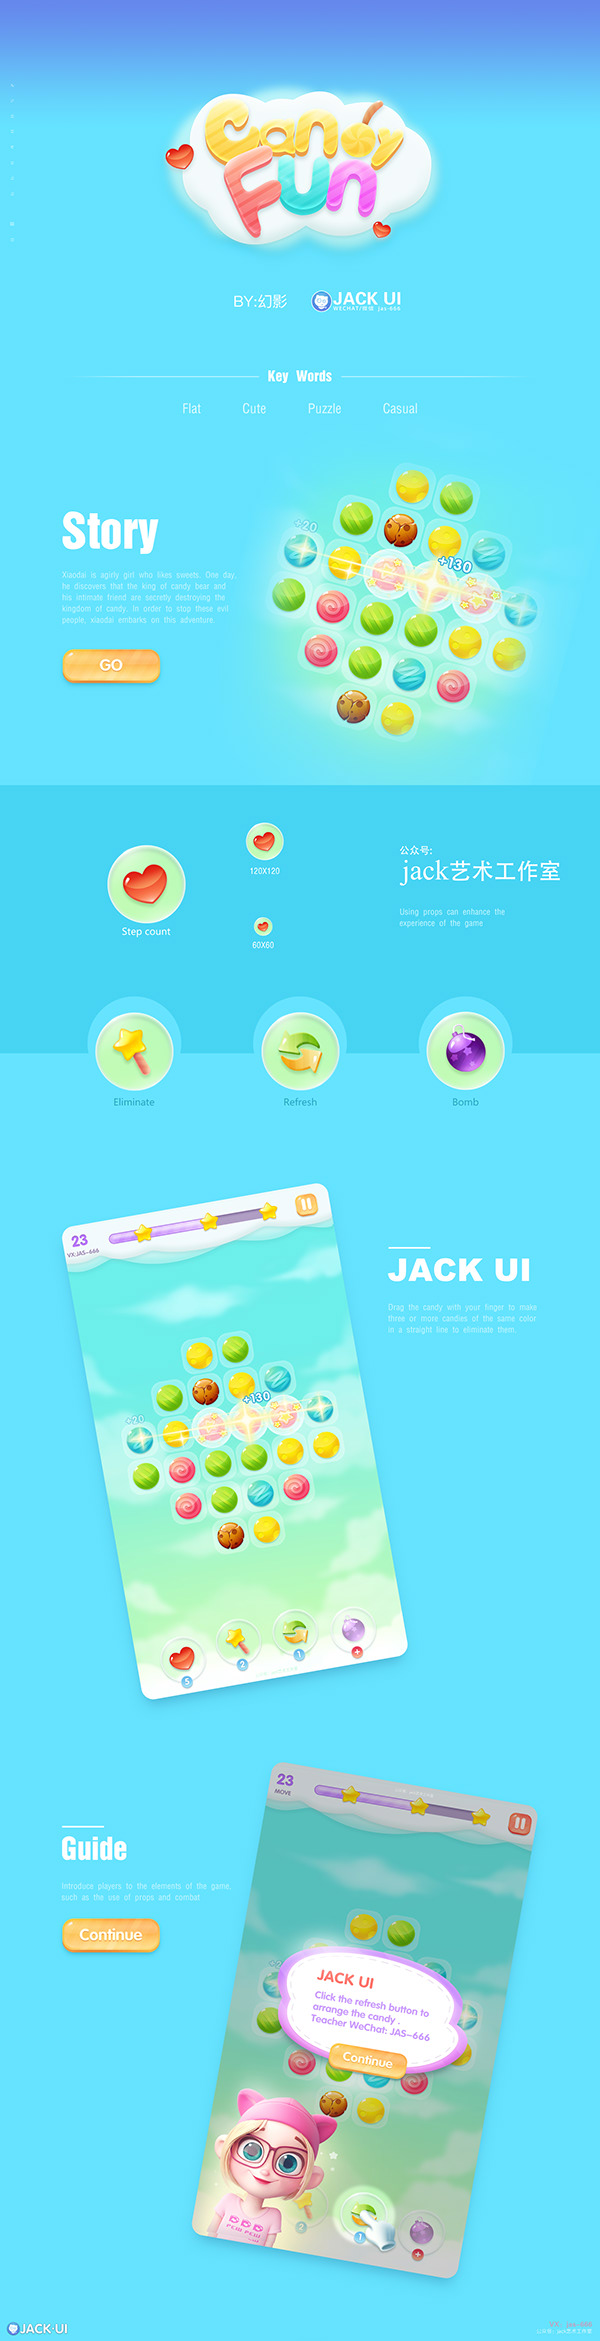 【JACK游戏UI】GAME UI二次元欧美风中国风界面动效特效原画手绘图标平面素材GUI/ICON/UIUX